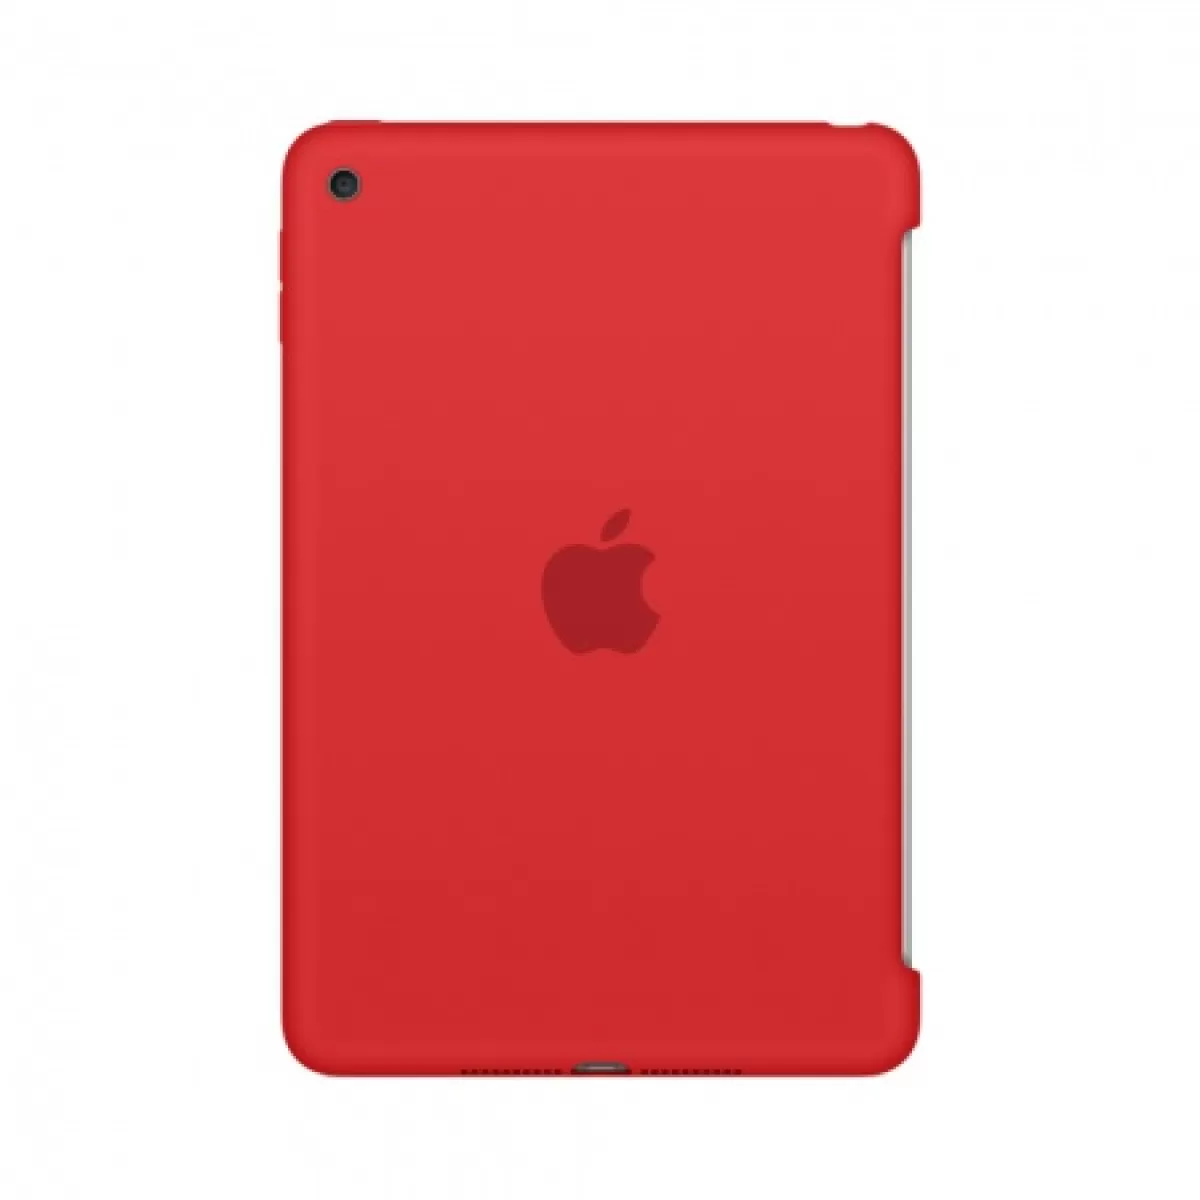 Apple iPad mini 4 Silicone Case (PRODUCT) RED